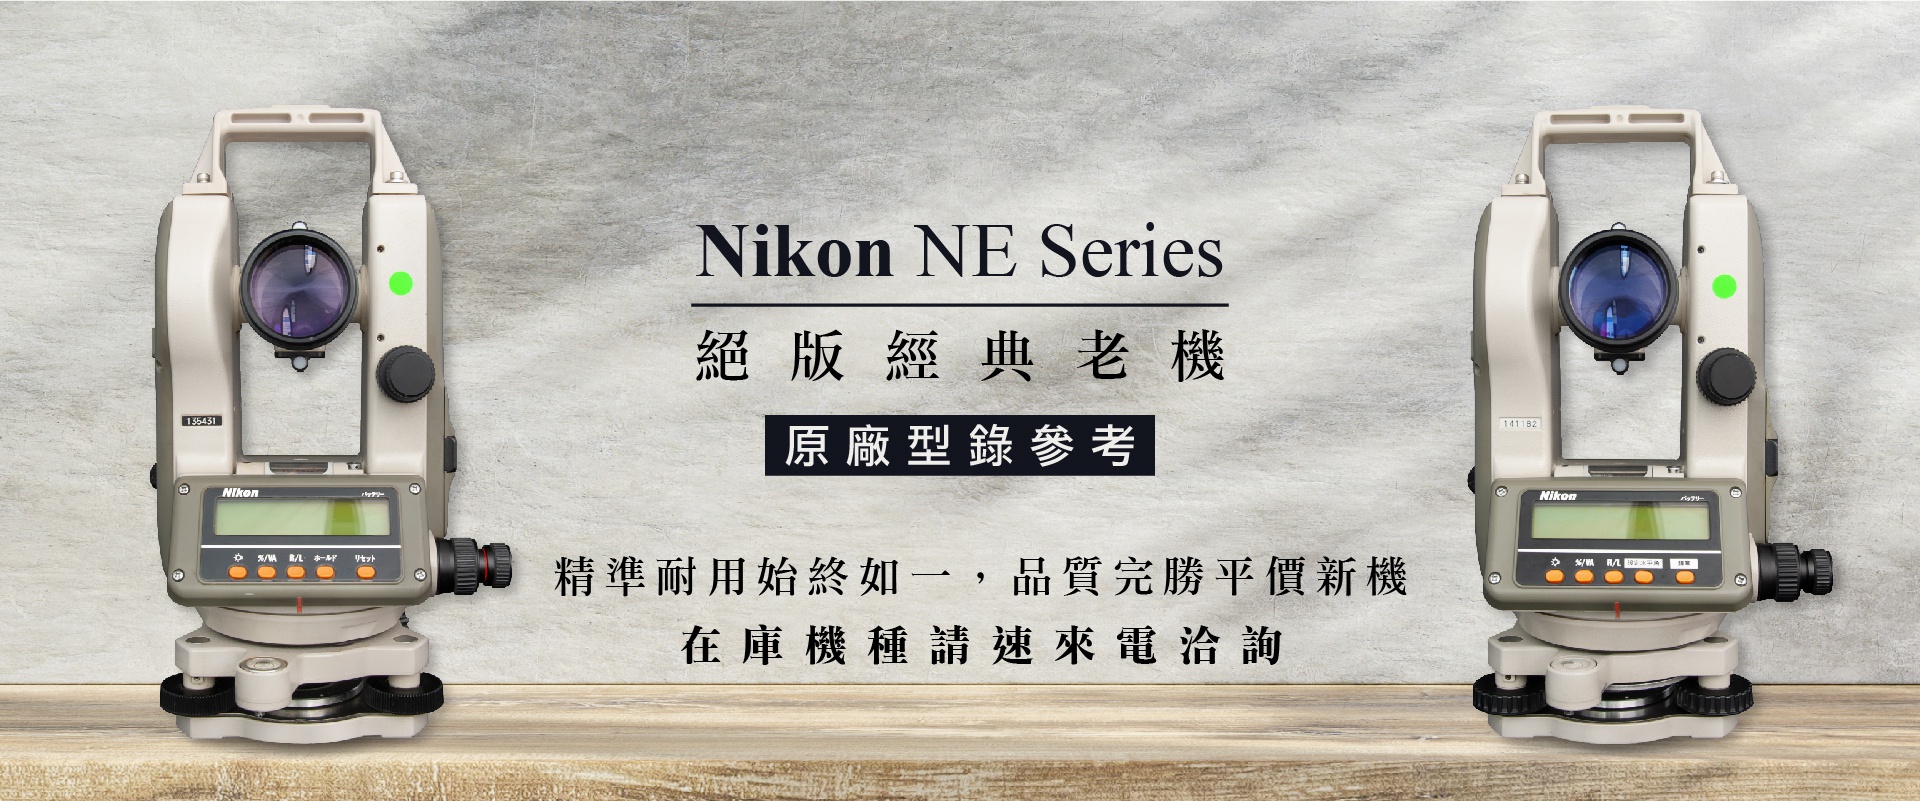 Nikon NE系列 中古經緯儀